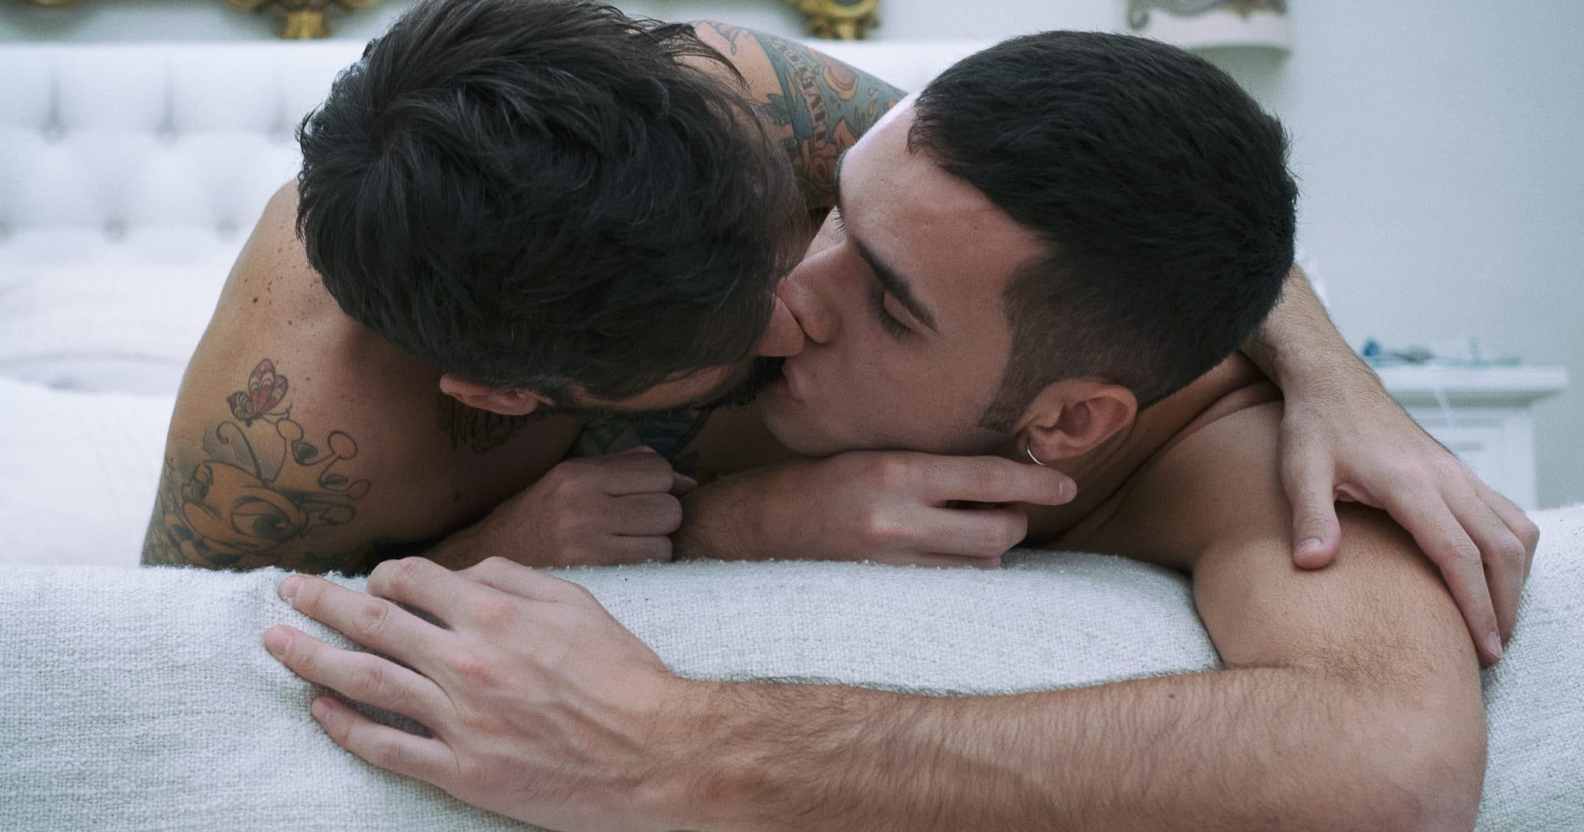 Lesbian Lesbians - Gay porn: I'm a lesbian who loves gay male porn. Here's why